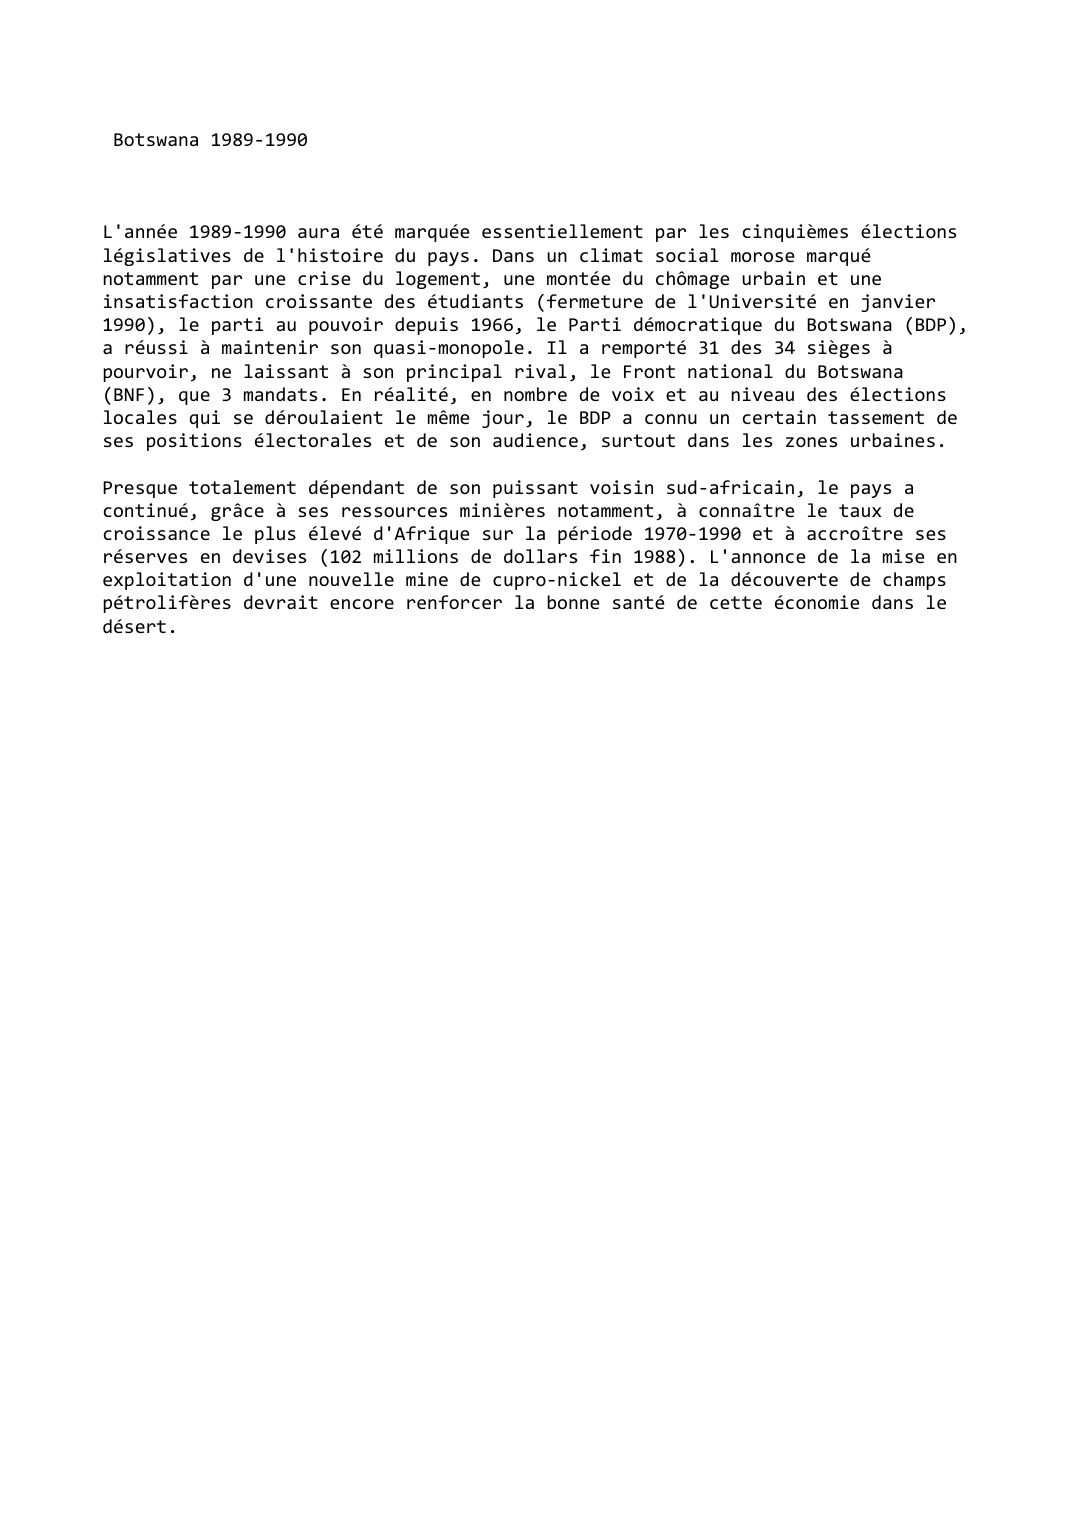 Prévisualisation du document Botswana 1989-1990